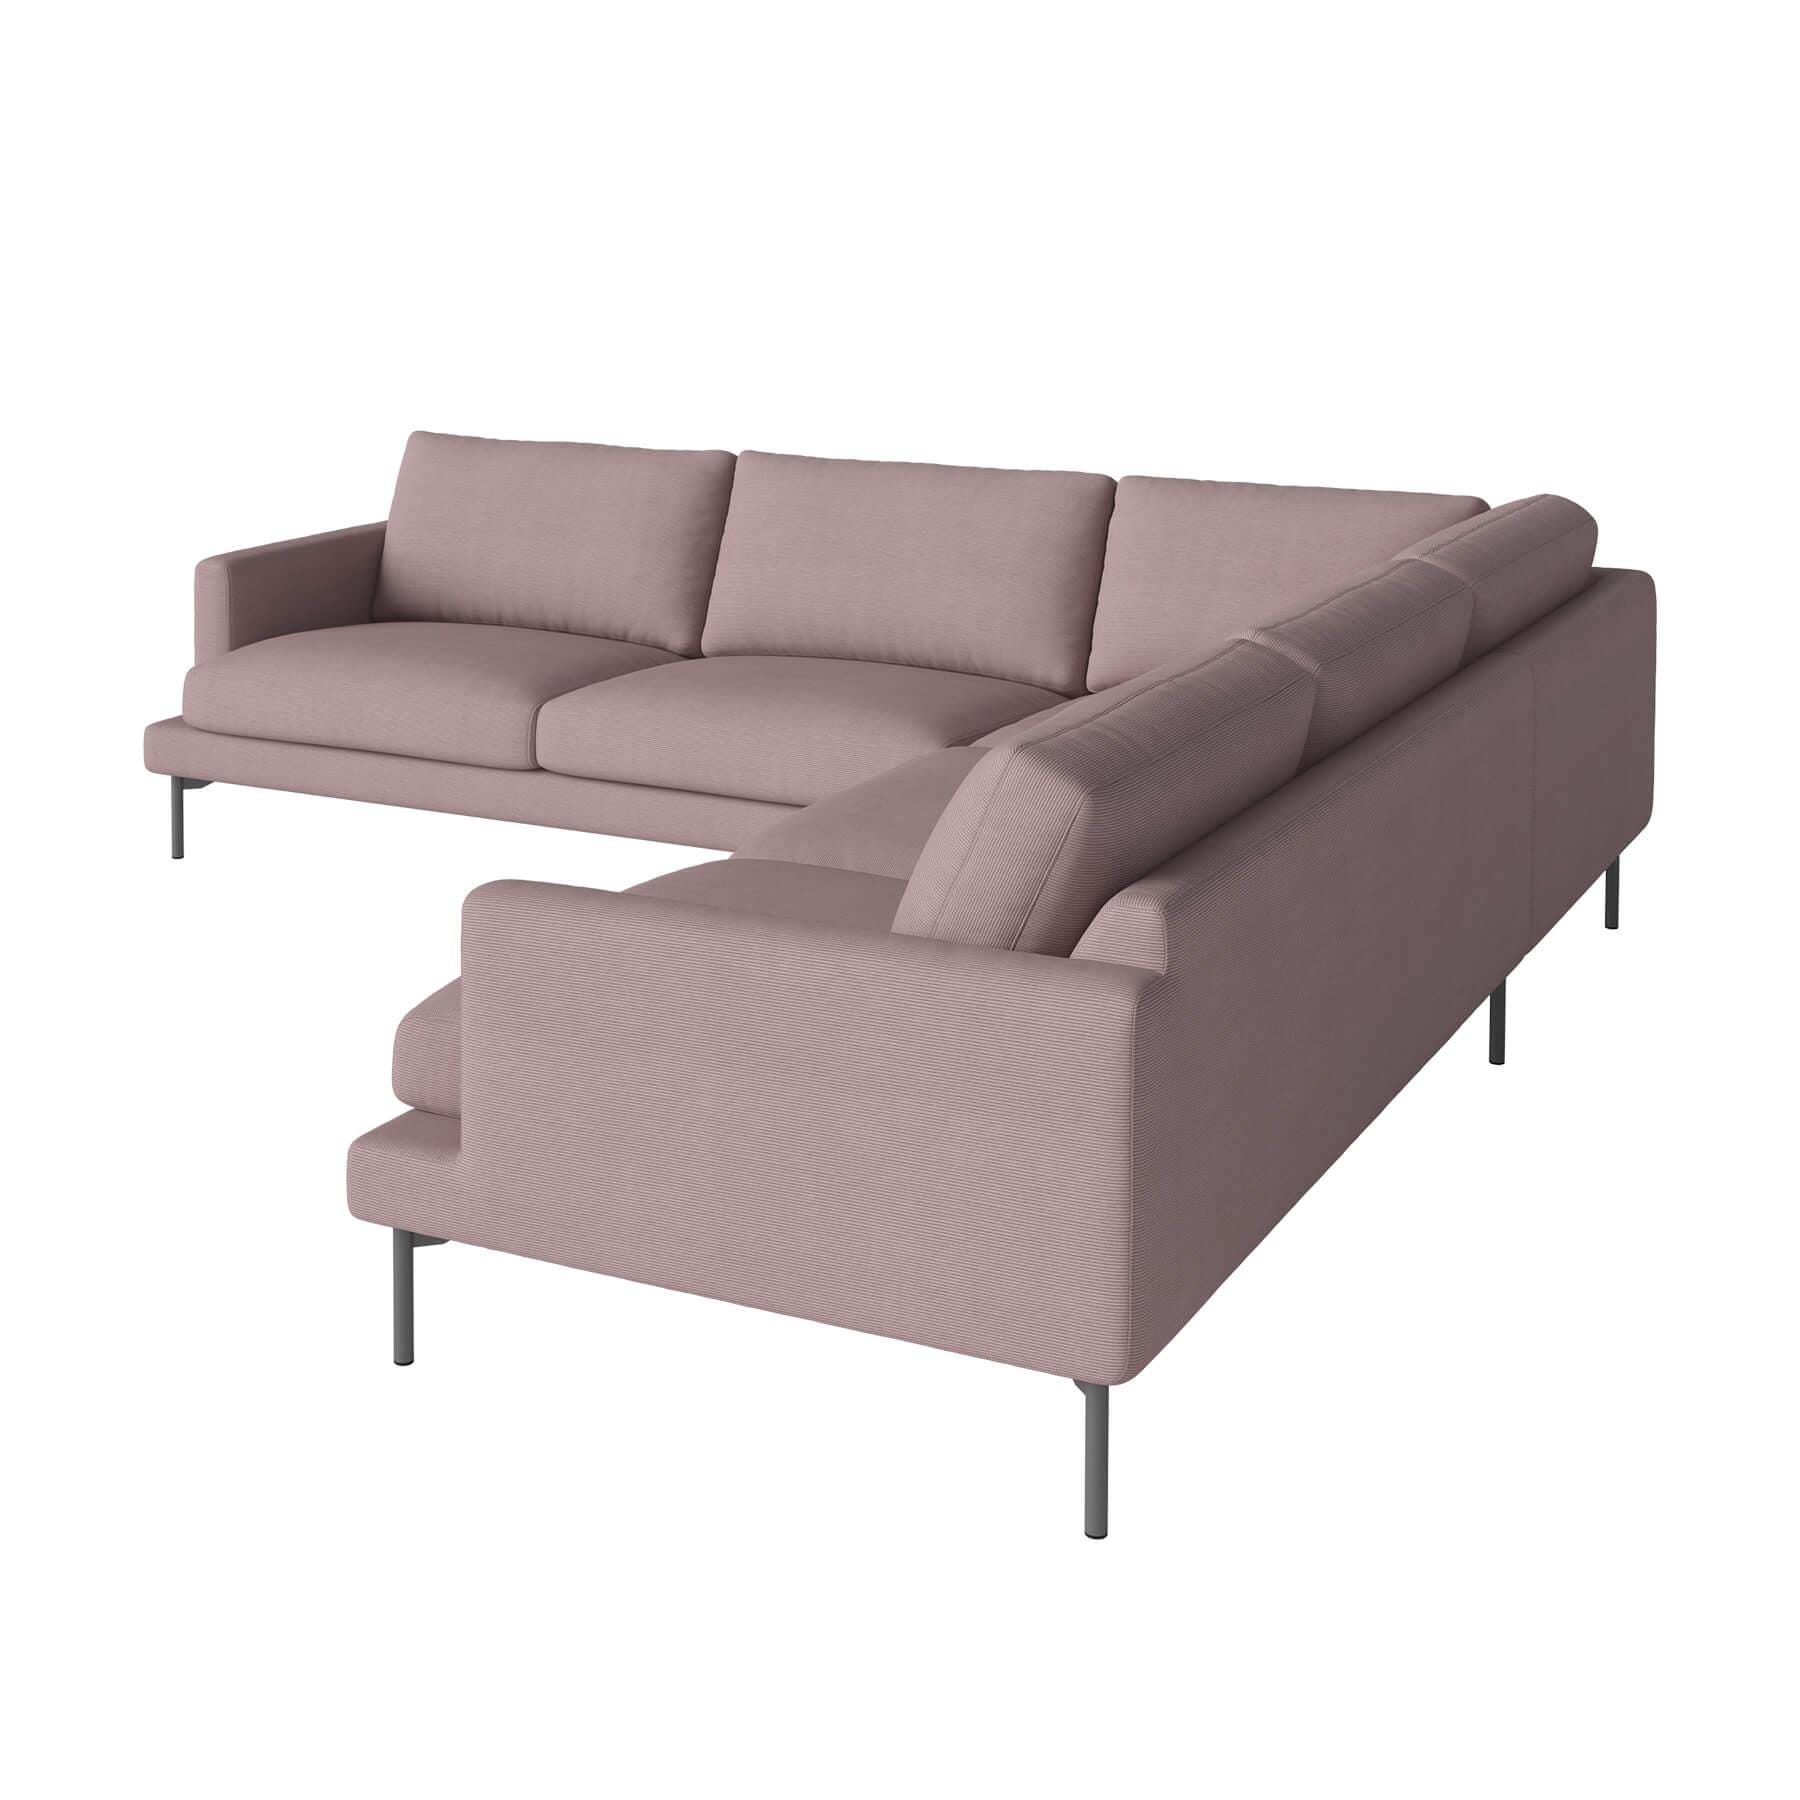 Bolia Veneda Sofa 6 Seater Sofa Corner Sofa Grey Laquered Steel Linea Rosa Pink Designer Furniture From Holloways Of Ludlow